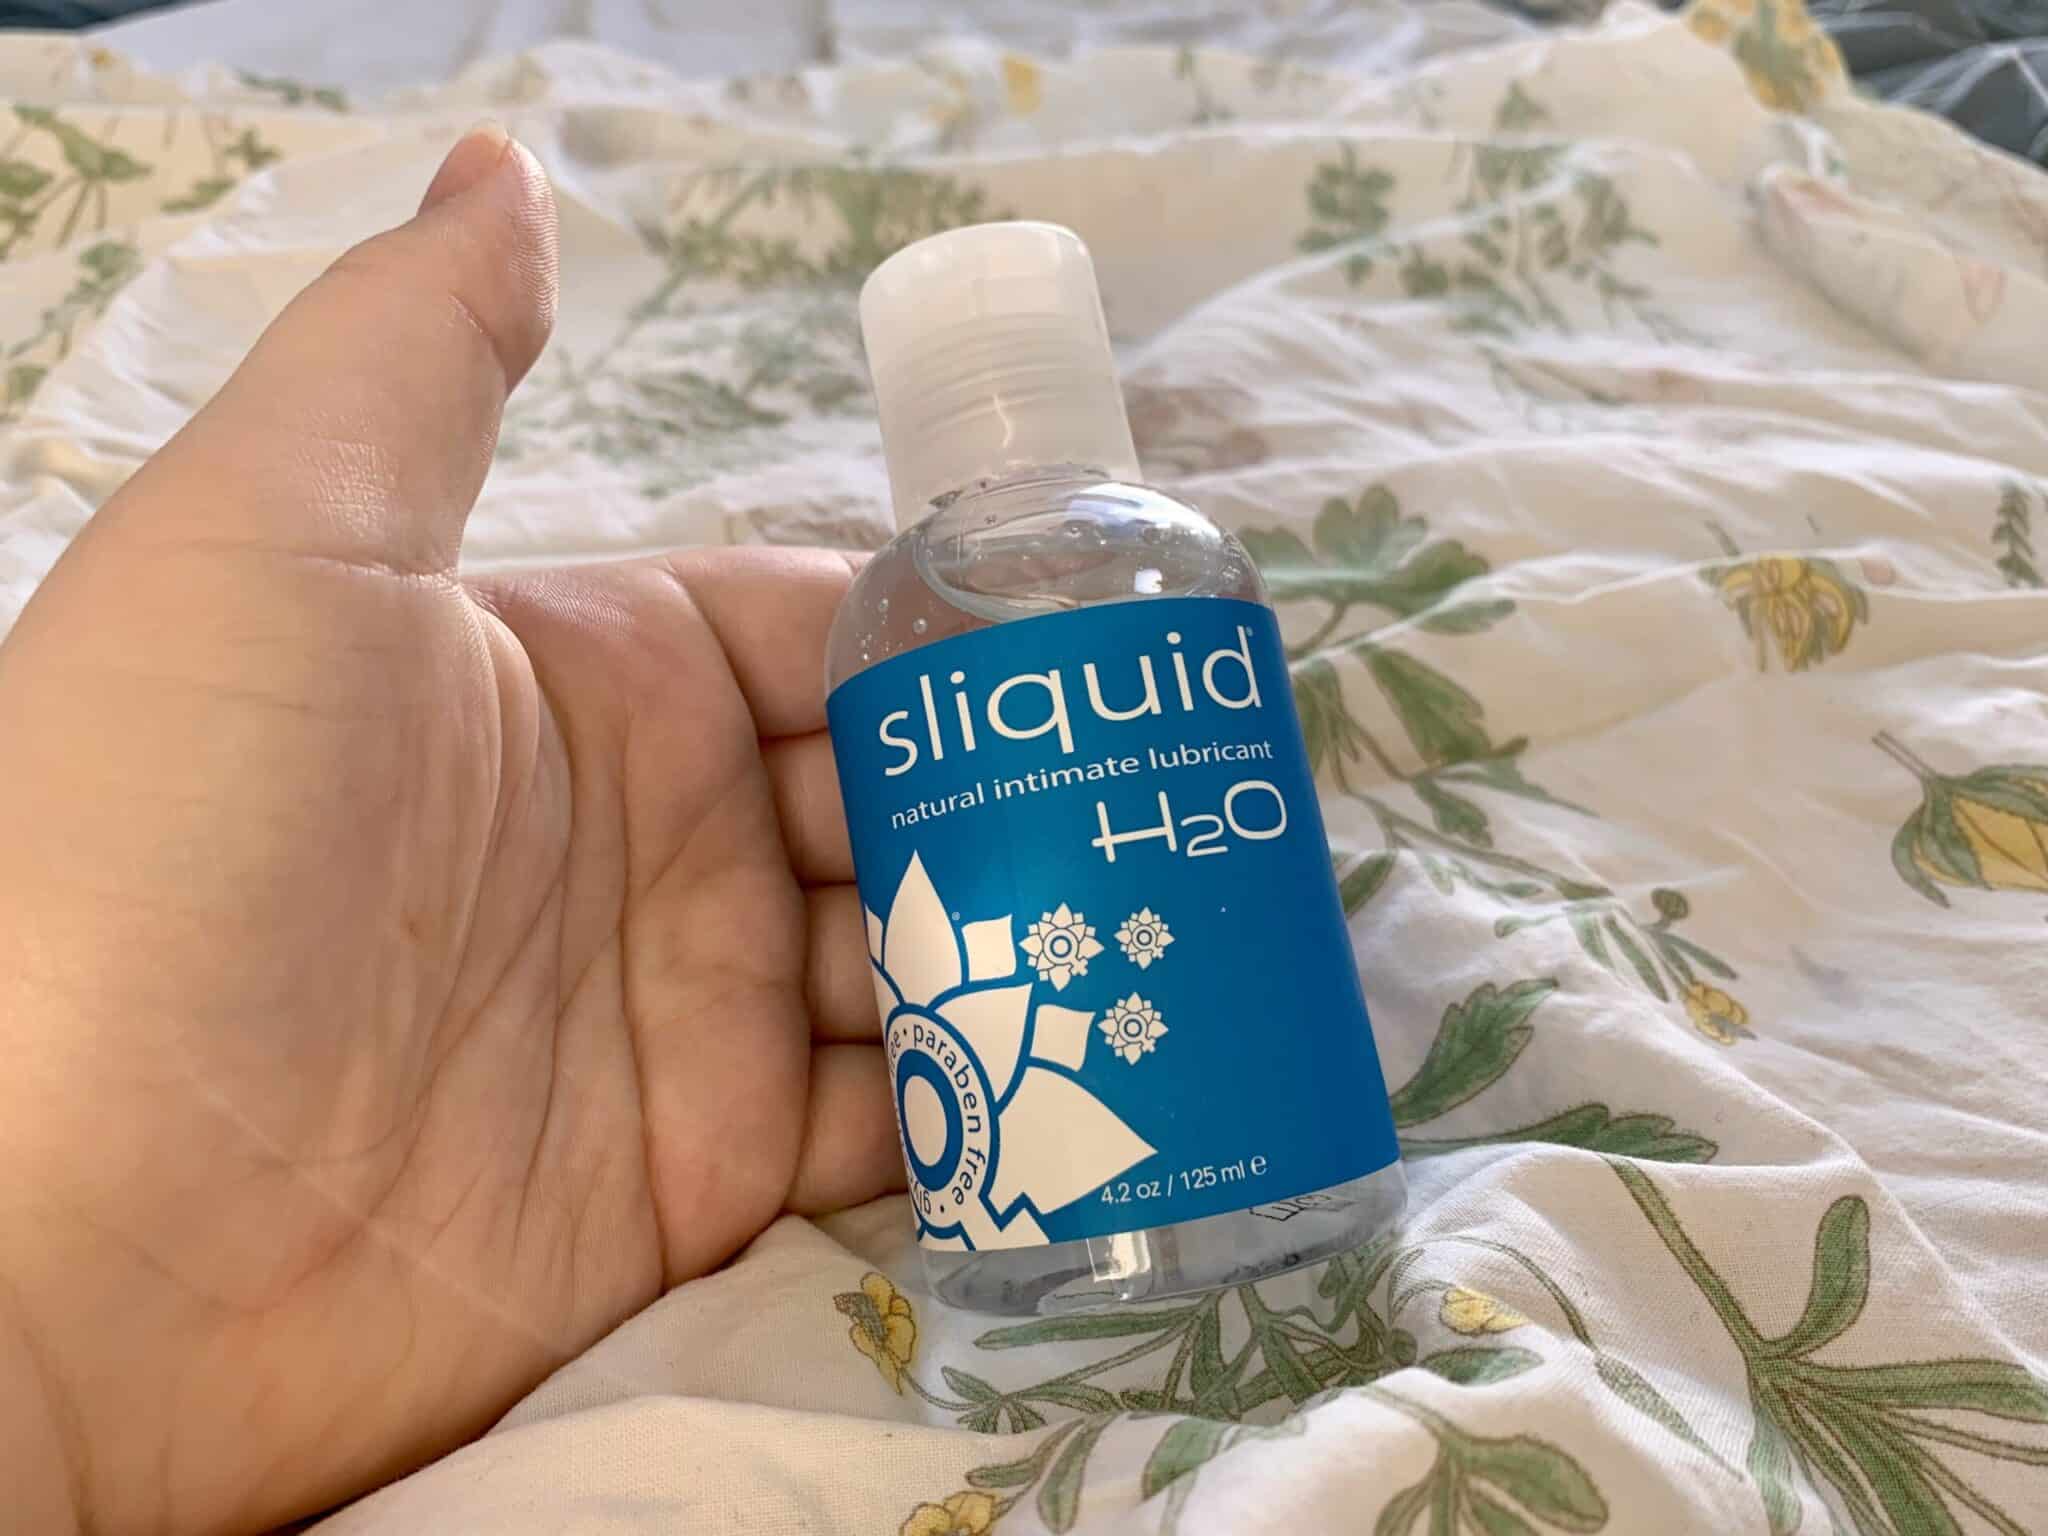 Sliquid H2O Original Water-Based Lubricant. Slide 2